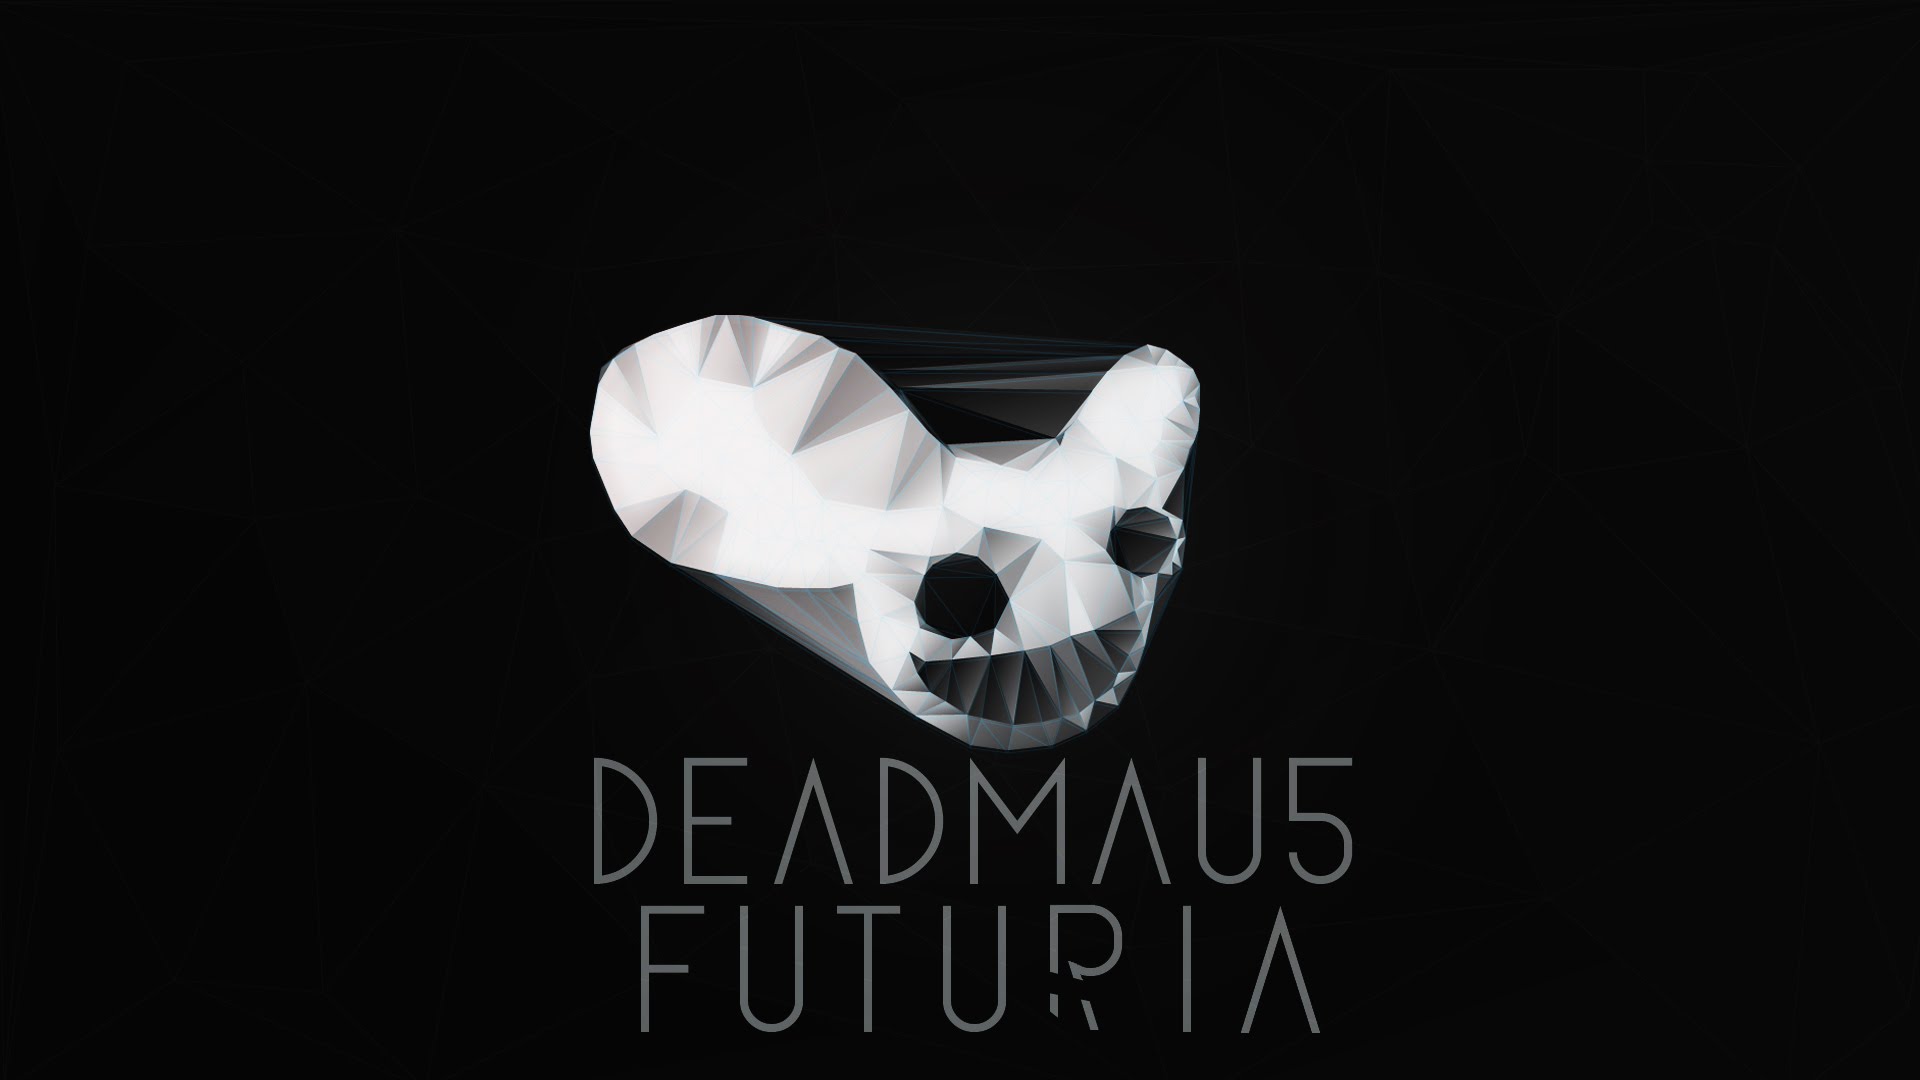 Futuria 1 Hour Of Dark Deadmau5 Songs